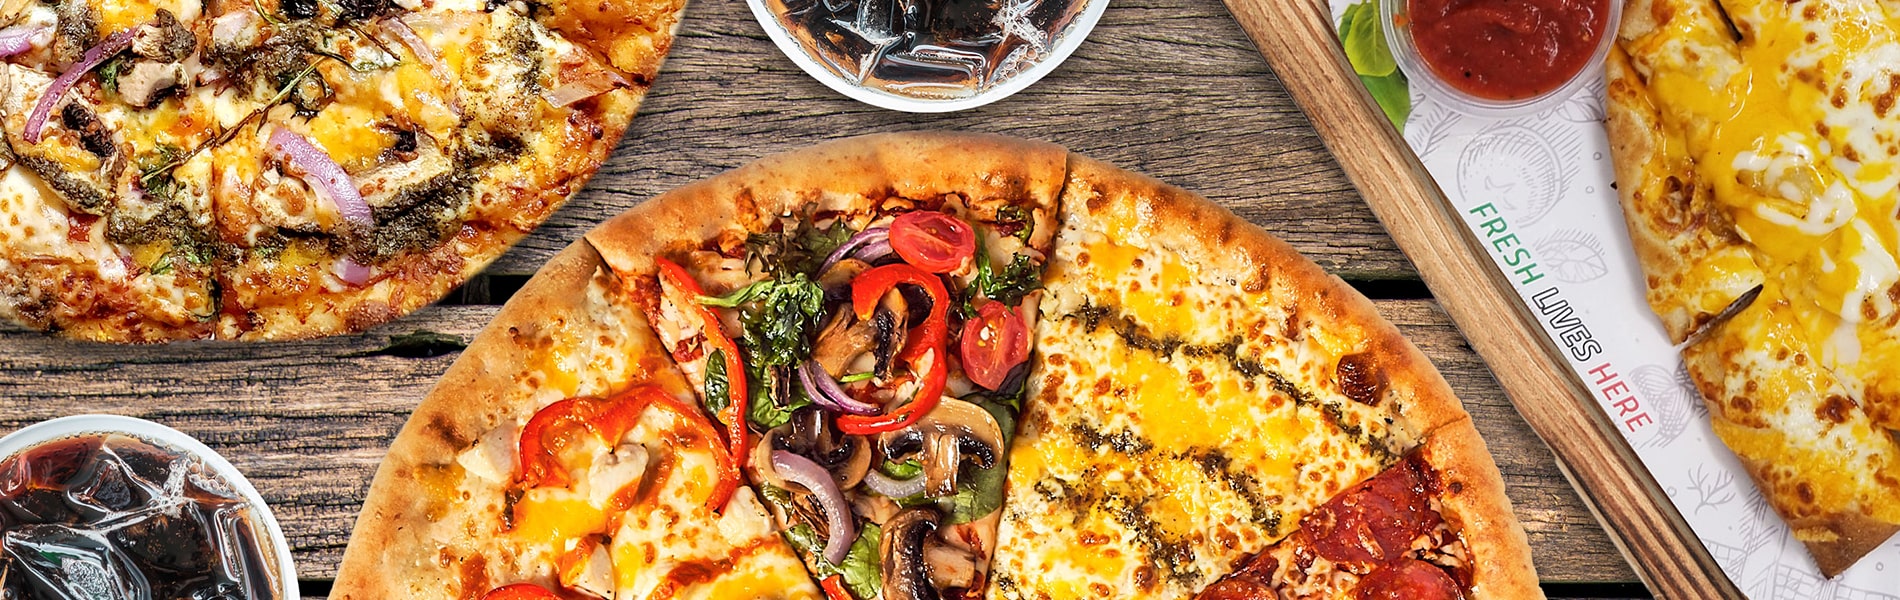 FRESHSLICE Pizza Restaurant – Order for Delivery or Pickup